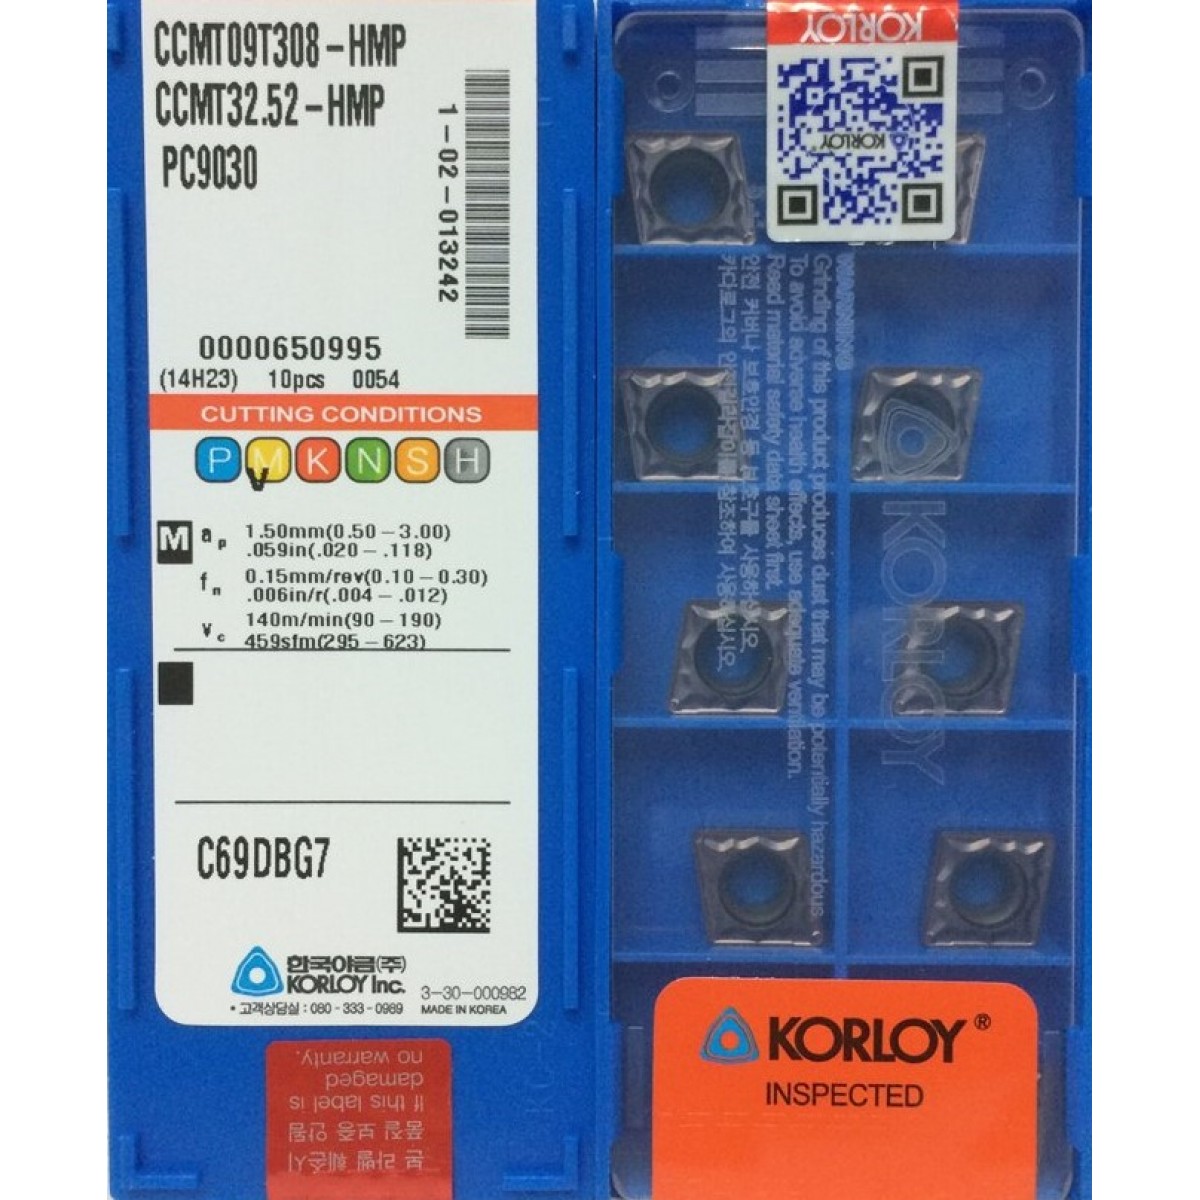 KORLOY - CCMT 09T308-HMP PC9030